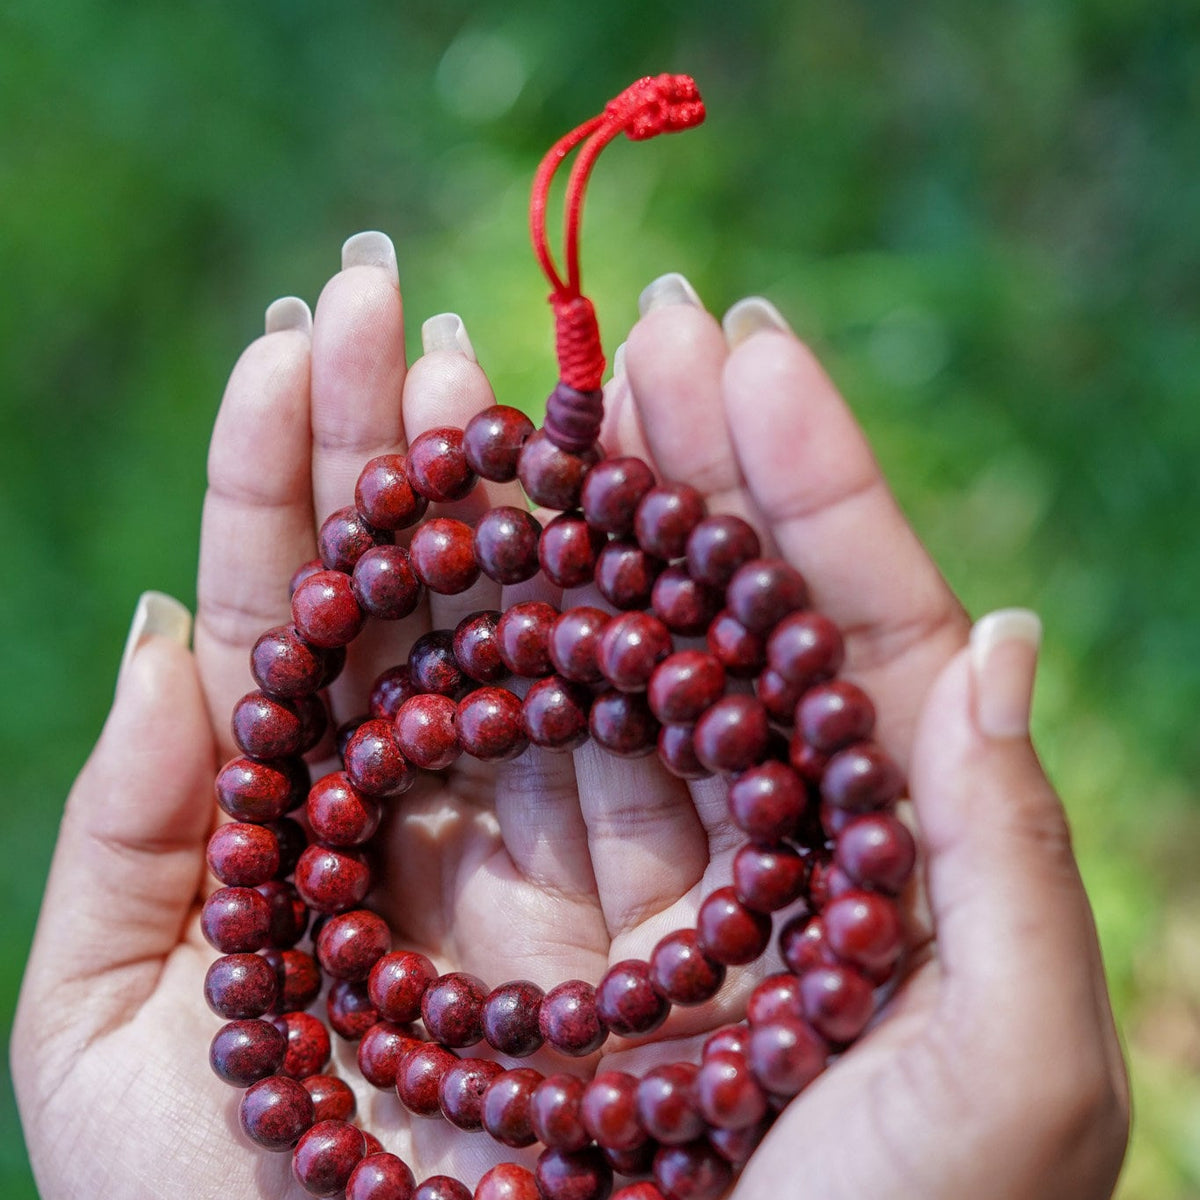 BISMAADH Japa/Meditation/Yoga/Prayer Mala - Natural Rose Wood Mala Beads